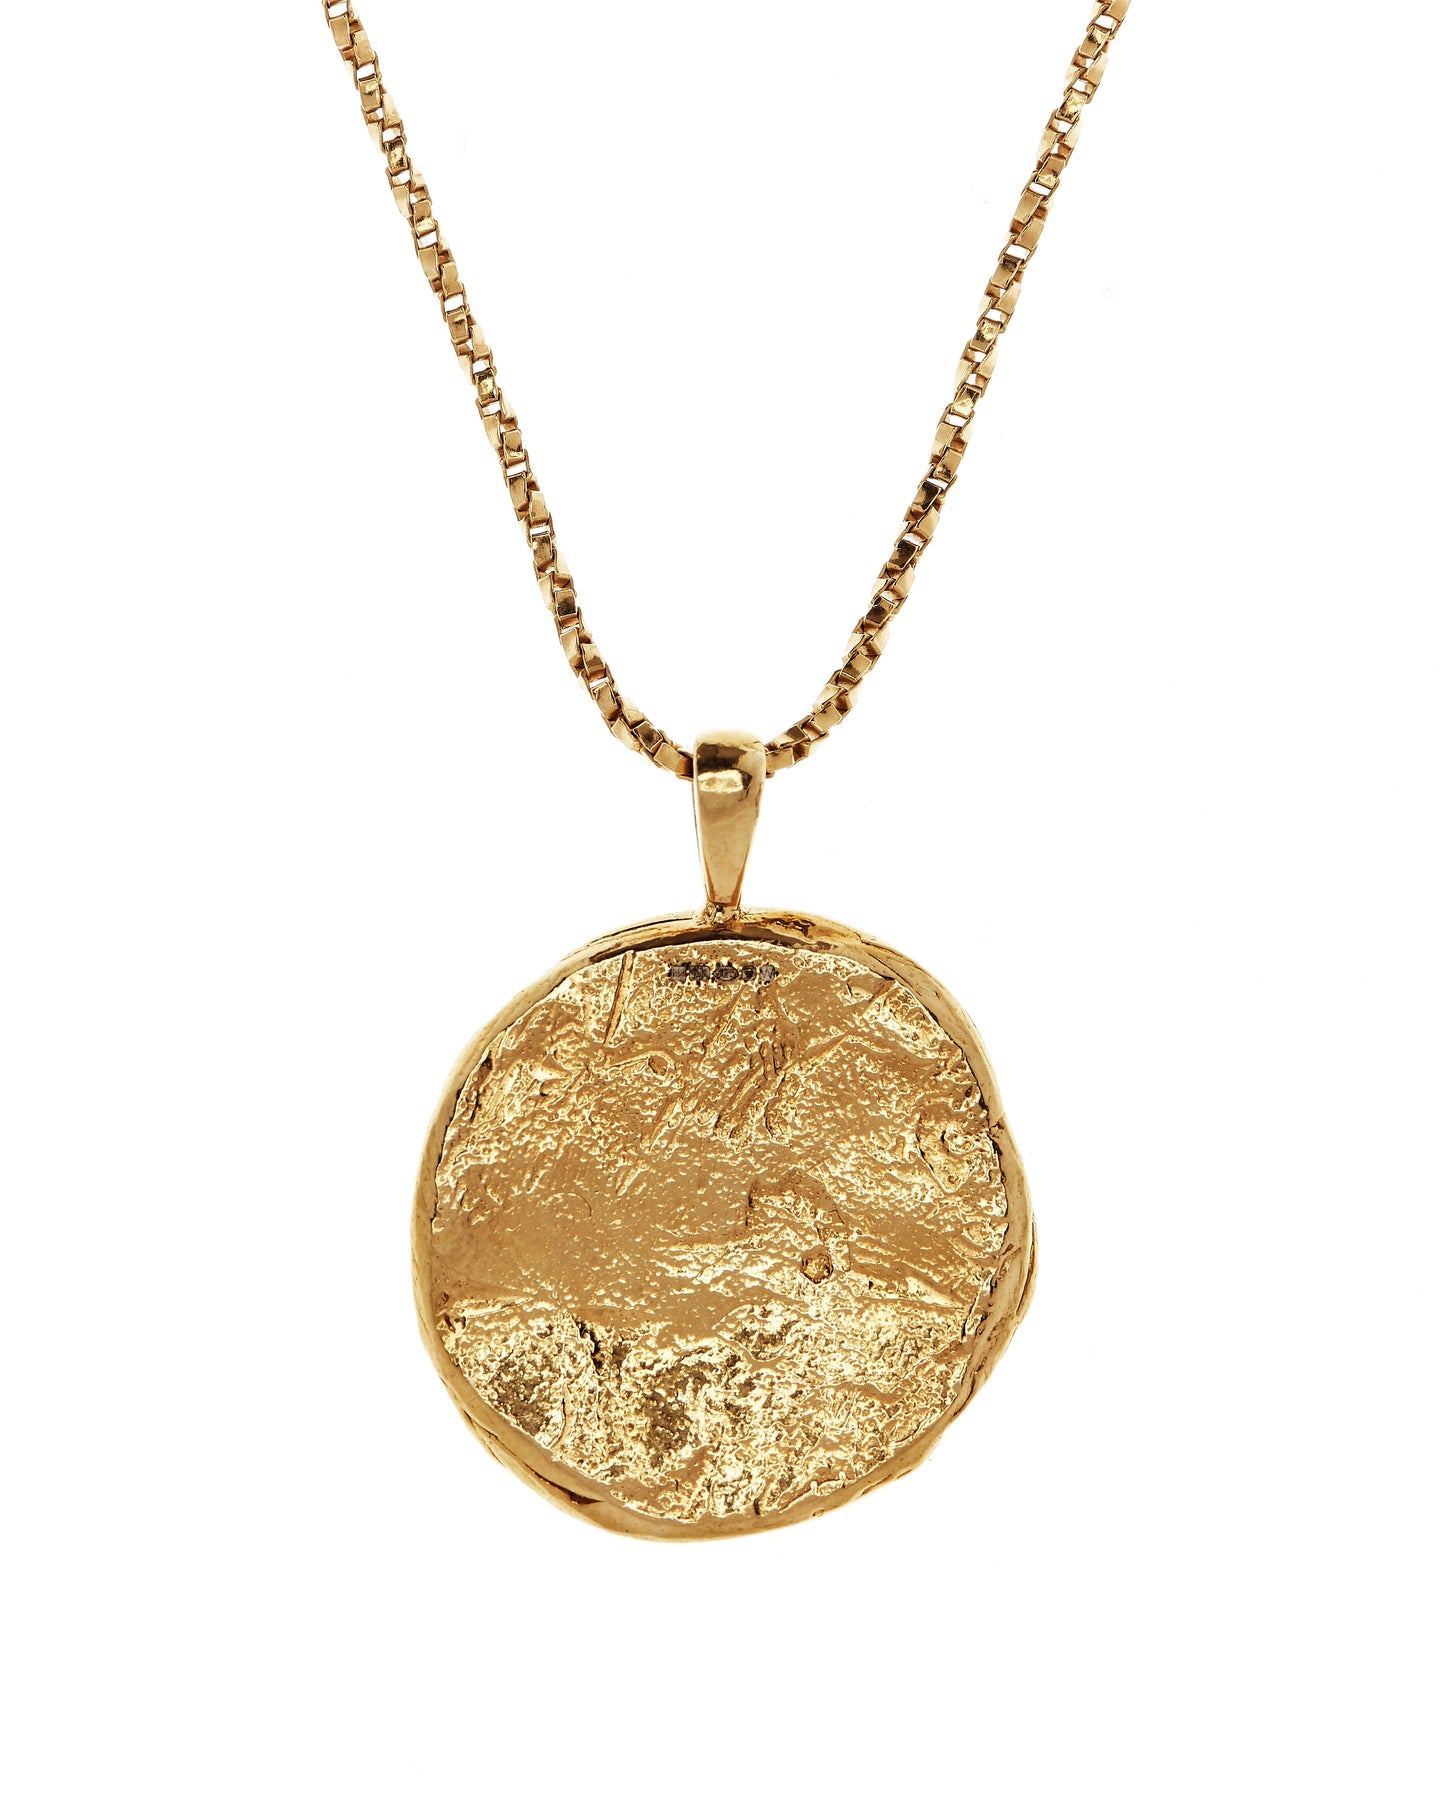 Back view of gold vermeil pendant showing texture